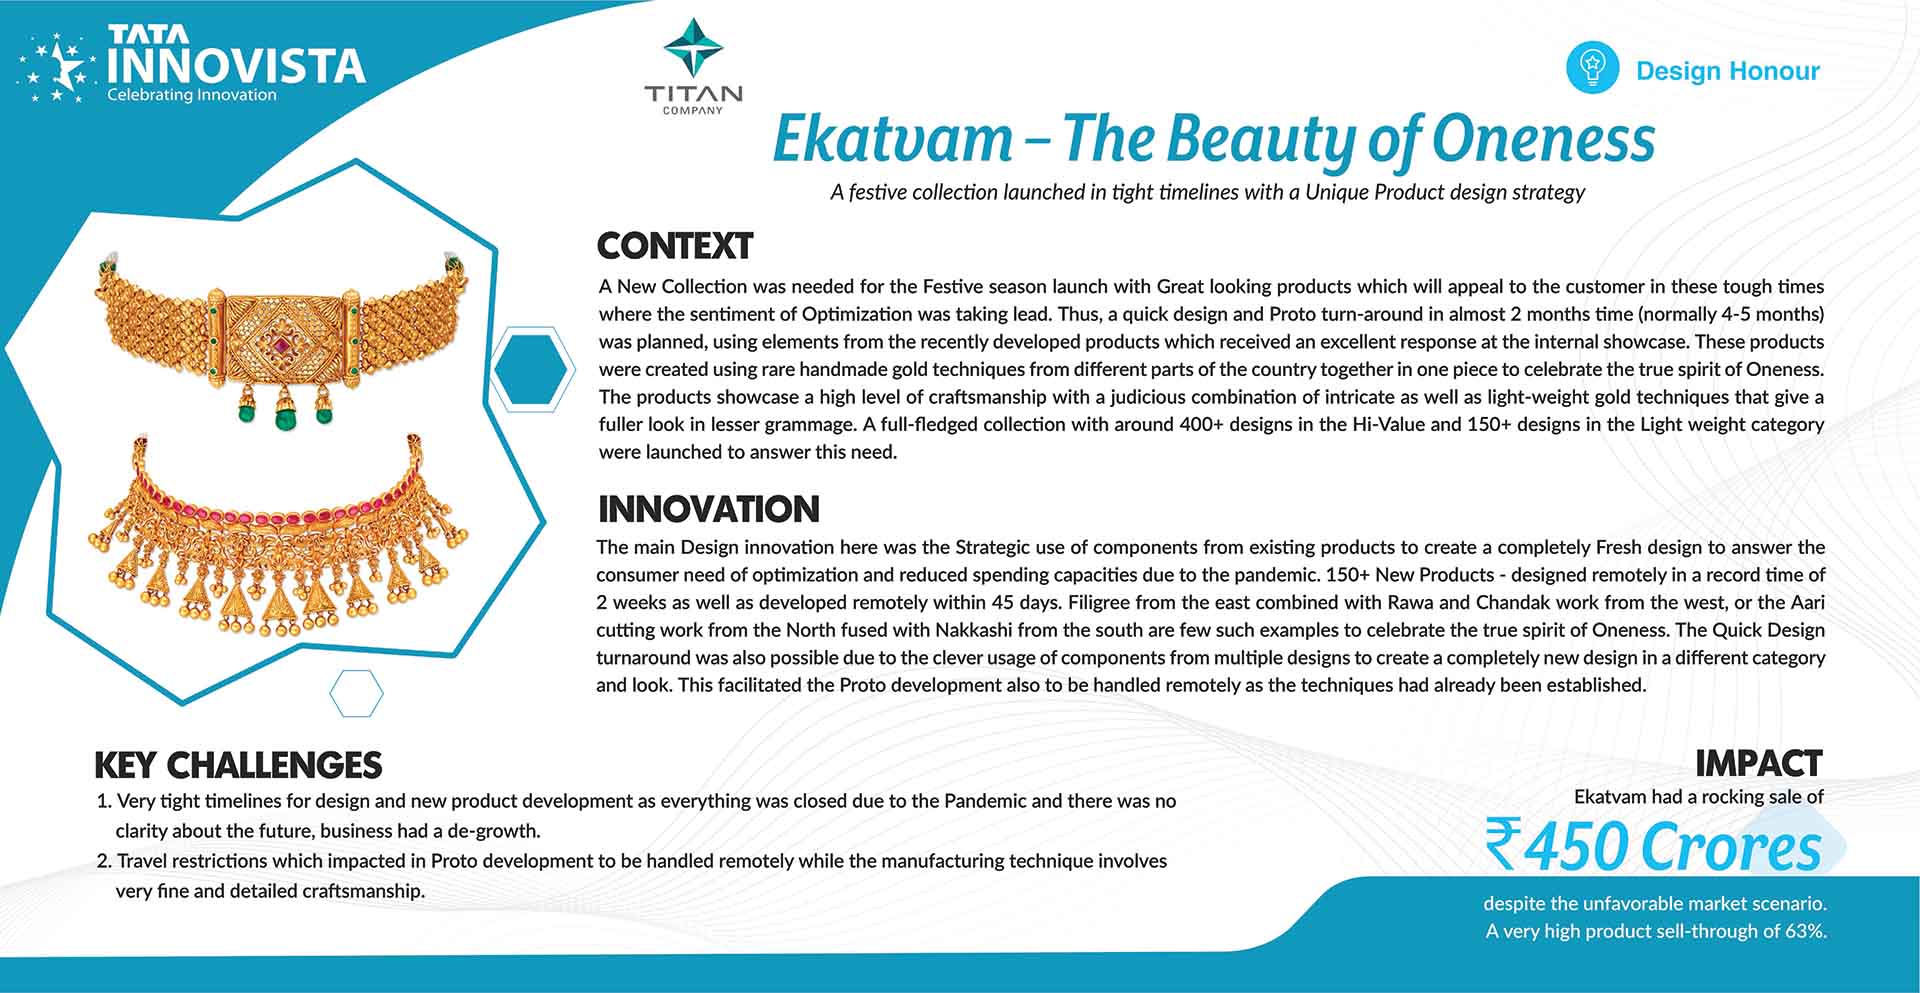 Ekatvam - The Beauty of Oneness